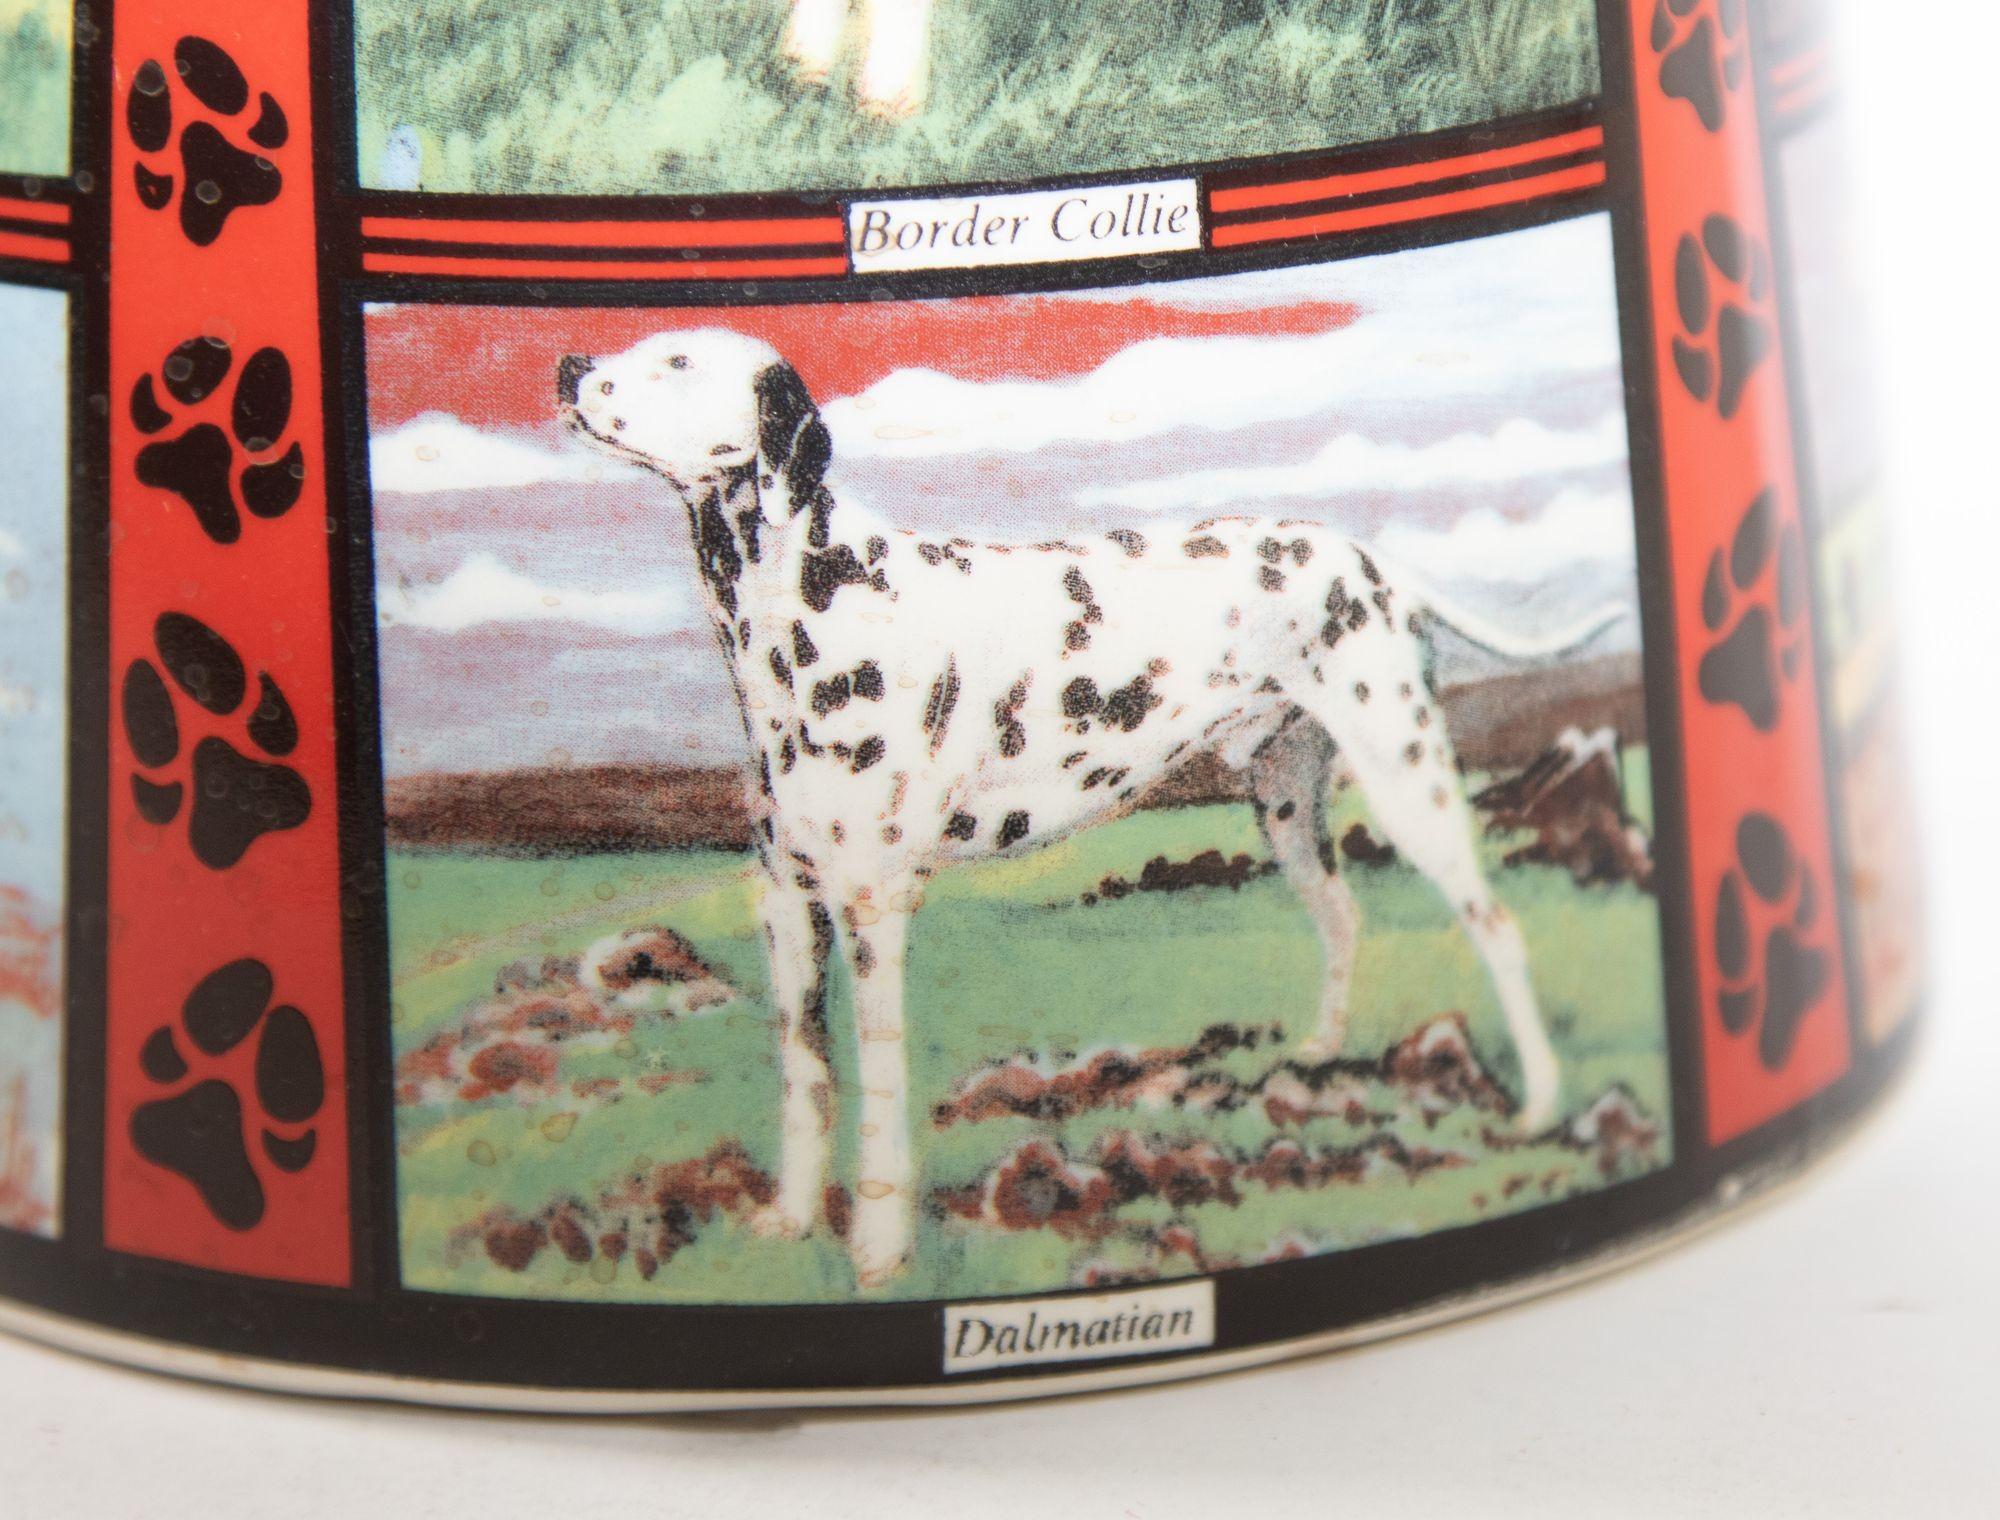 Vintage 1970s Ceramic Pitcher, Derbyshire England with Dog Breeds Pictures For Sale 4